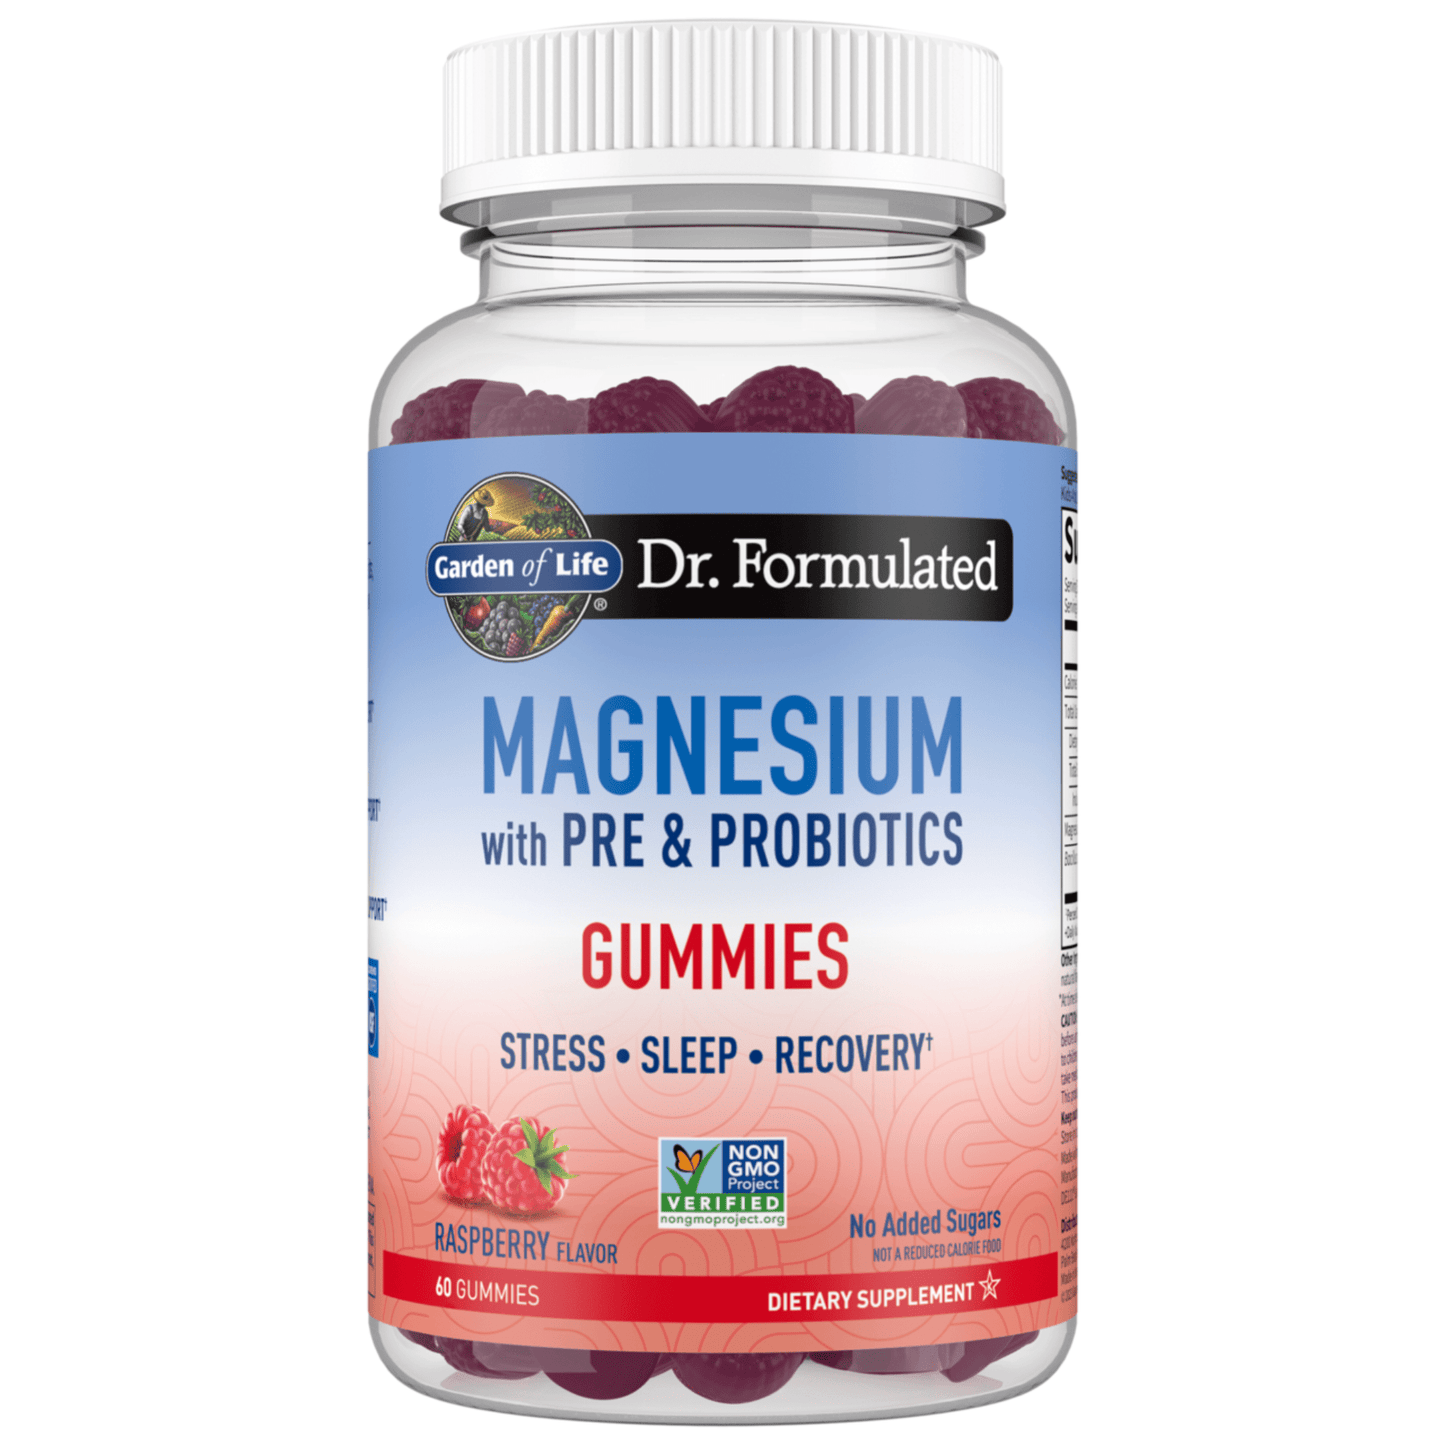 Primary Image of Magnesium Gummies Raspberry